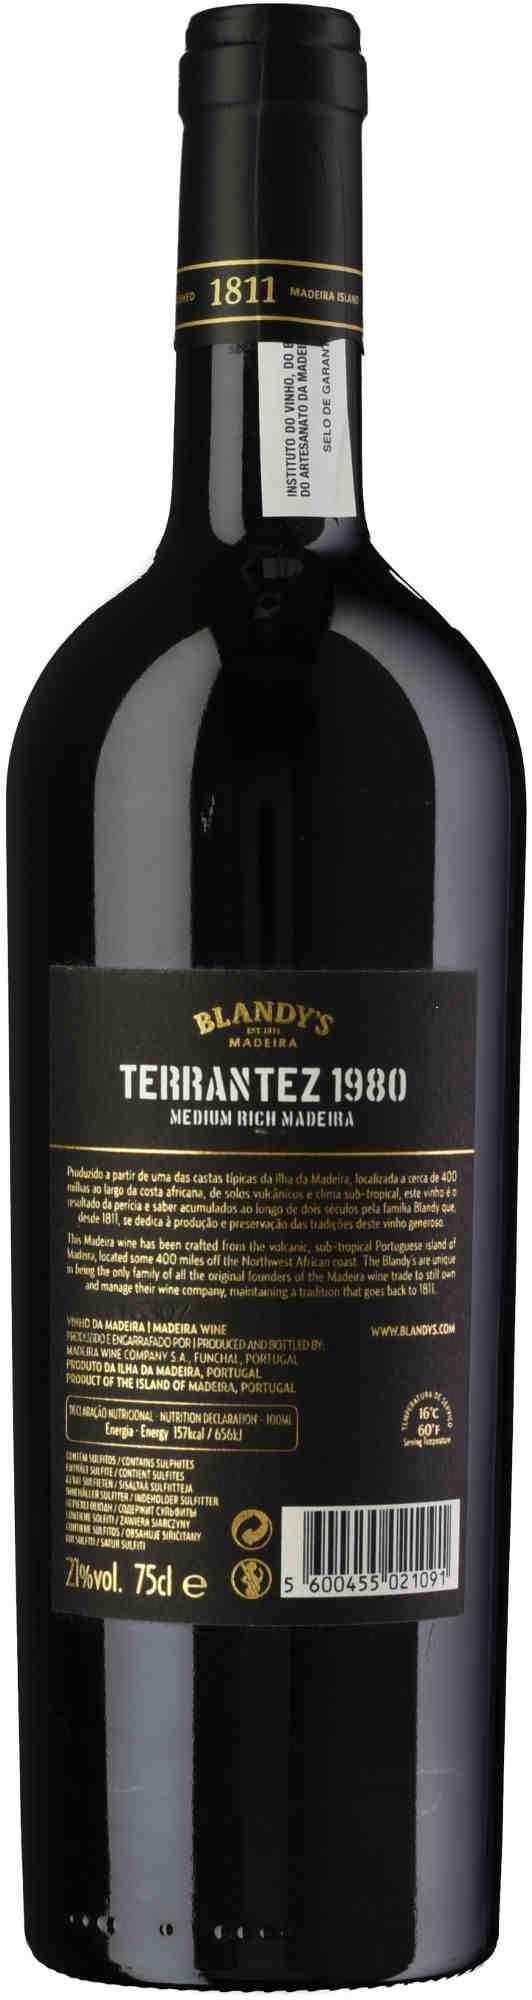 Blandy-Terrantez-Madeira-1980-back